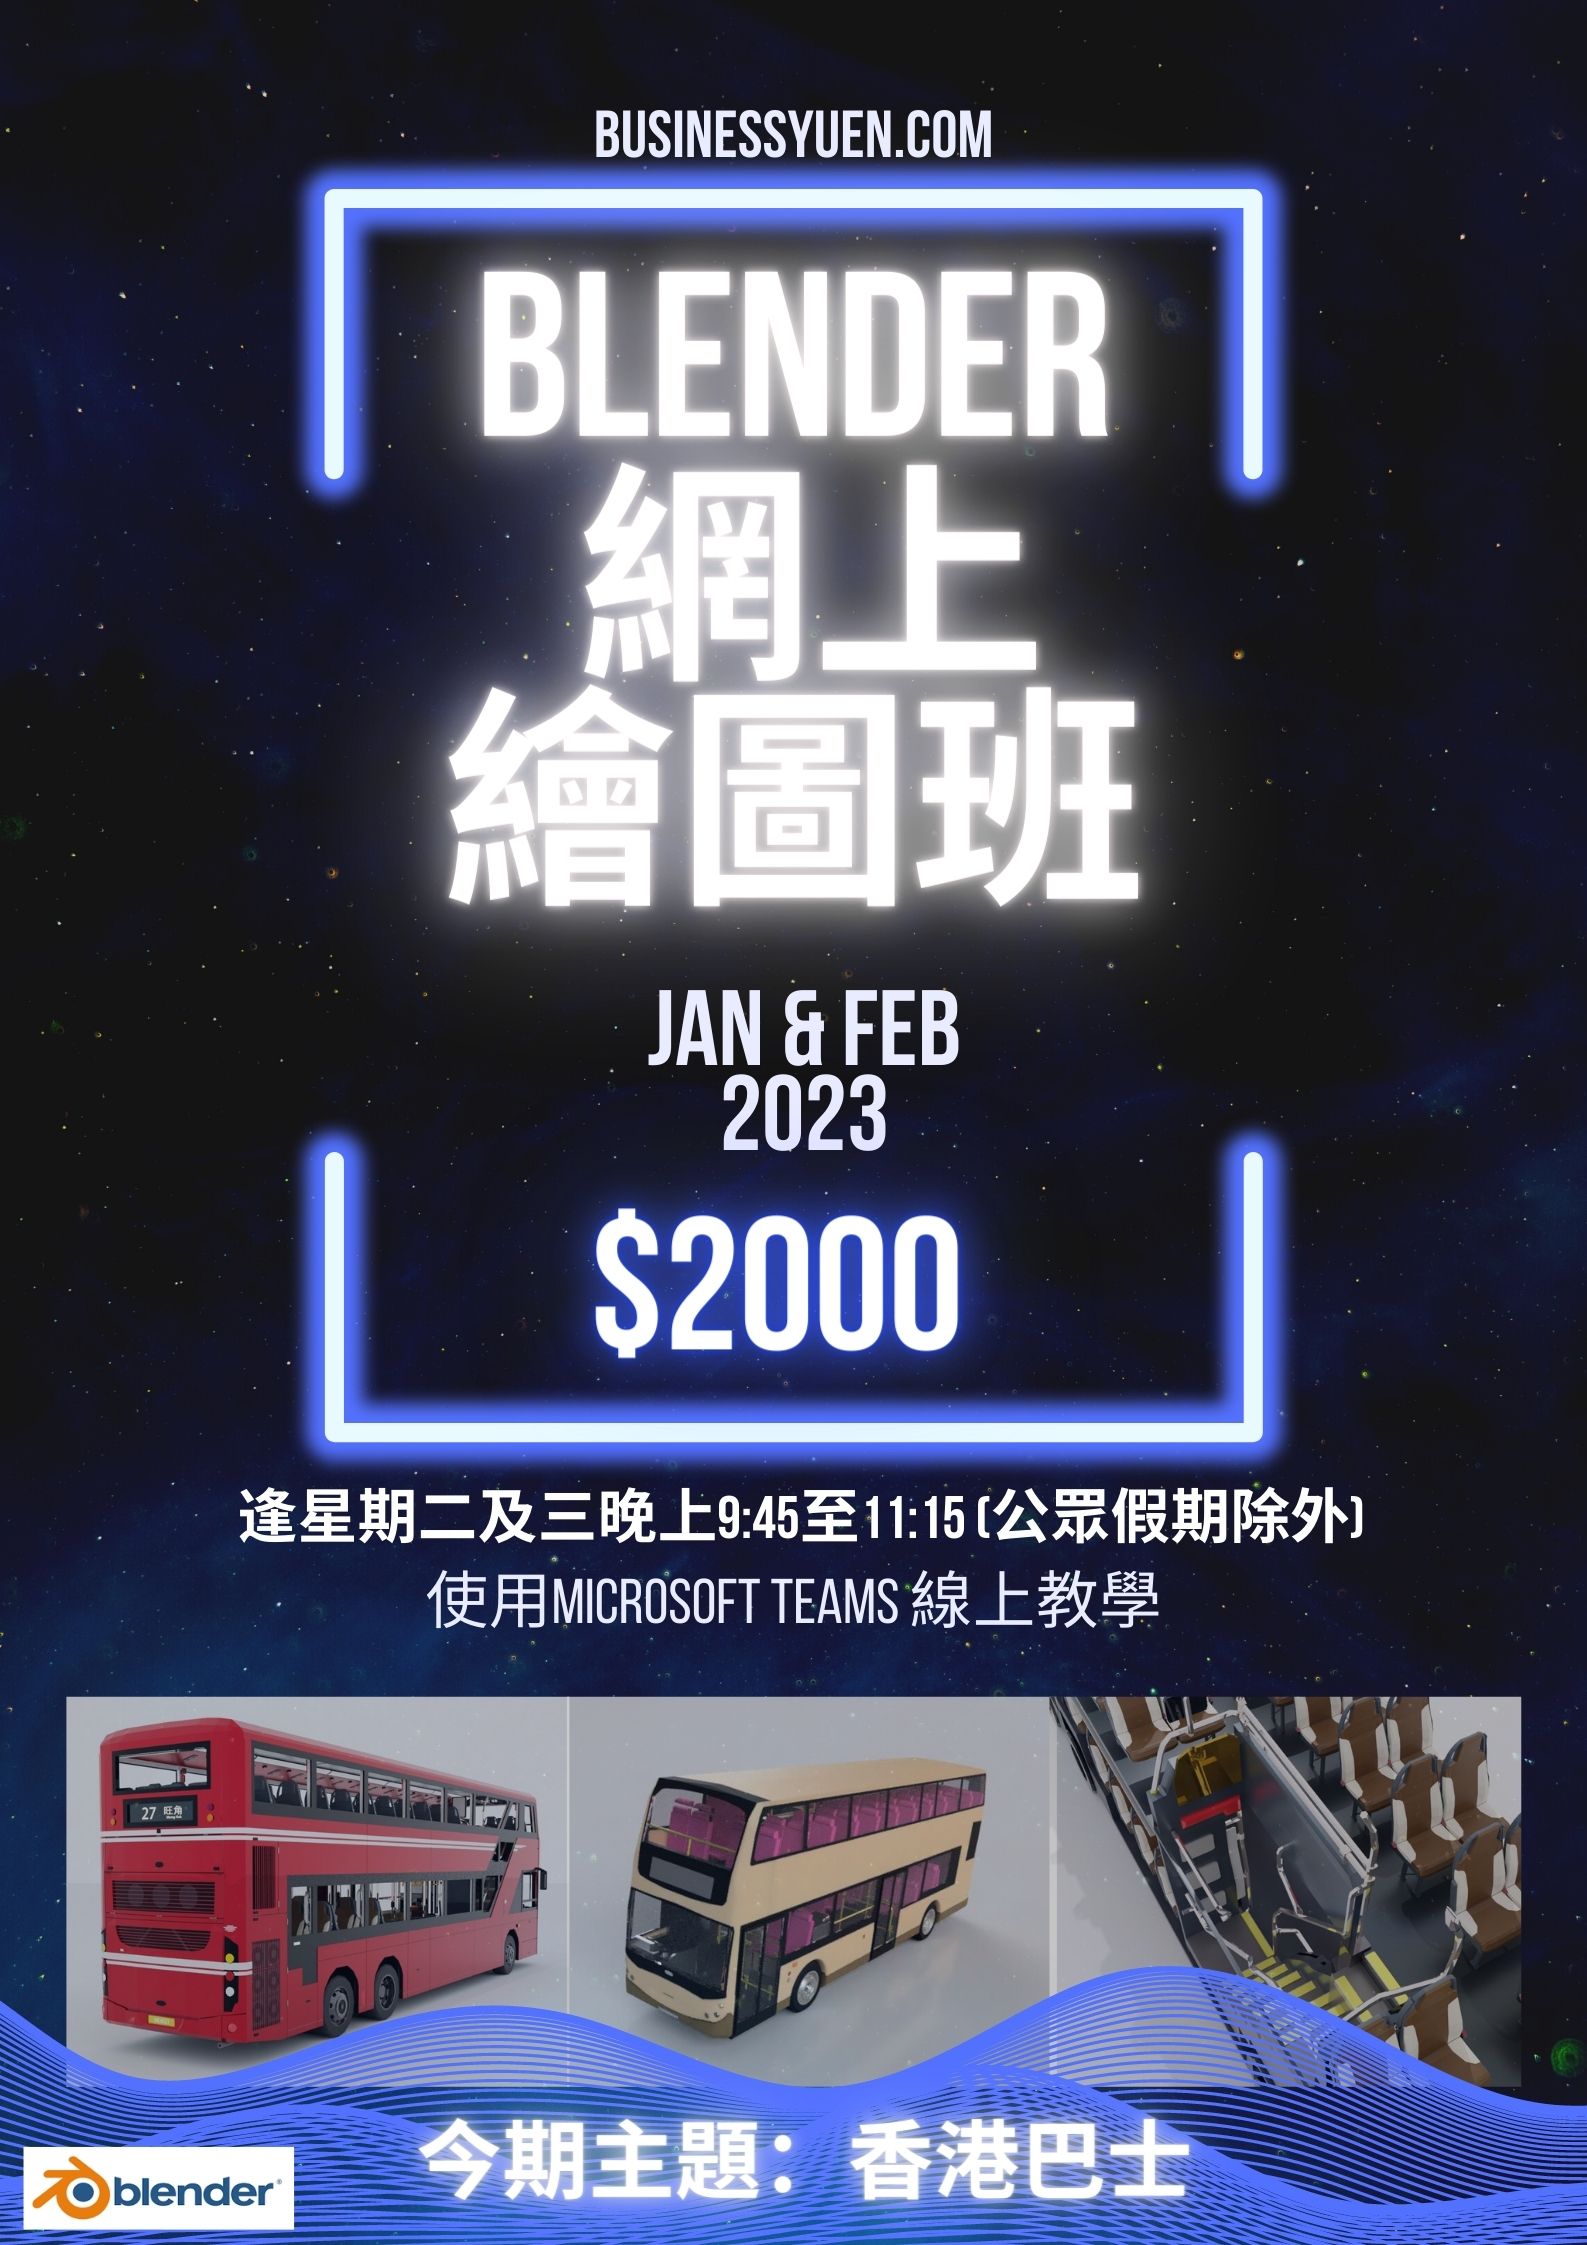 Blender 3D 模型繪圖班 (23年1月及2月)